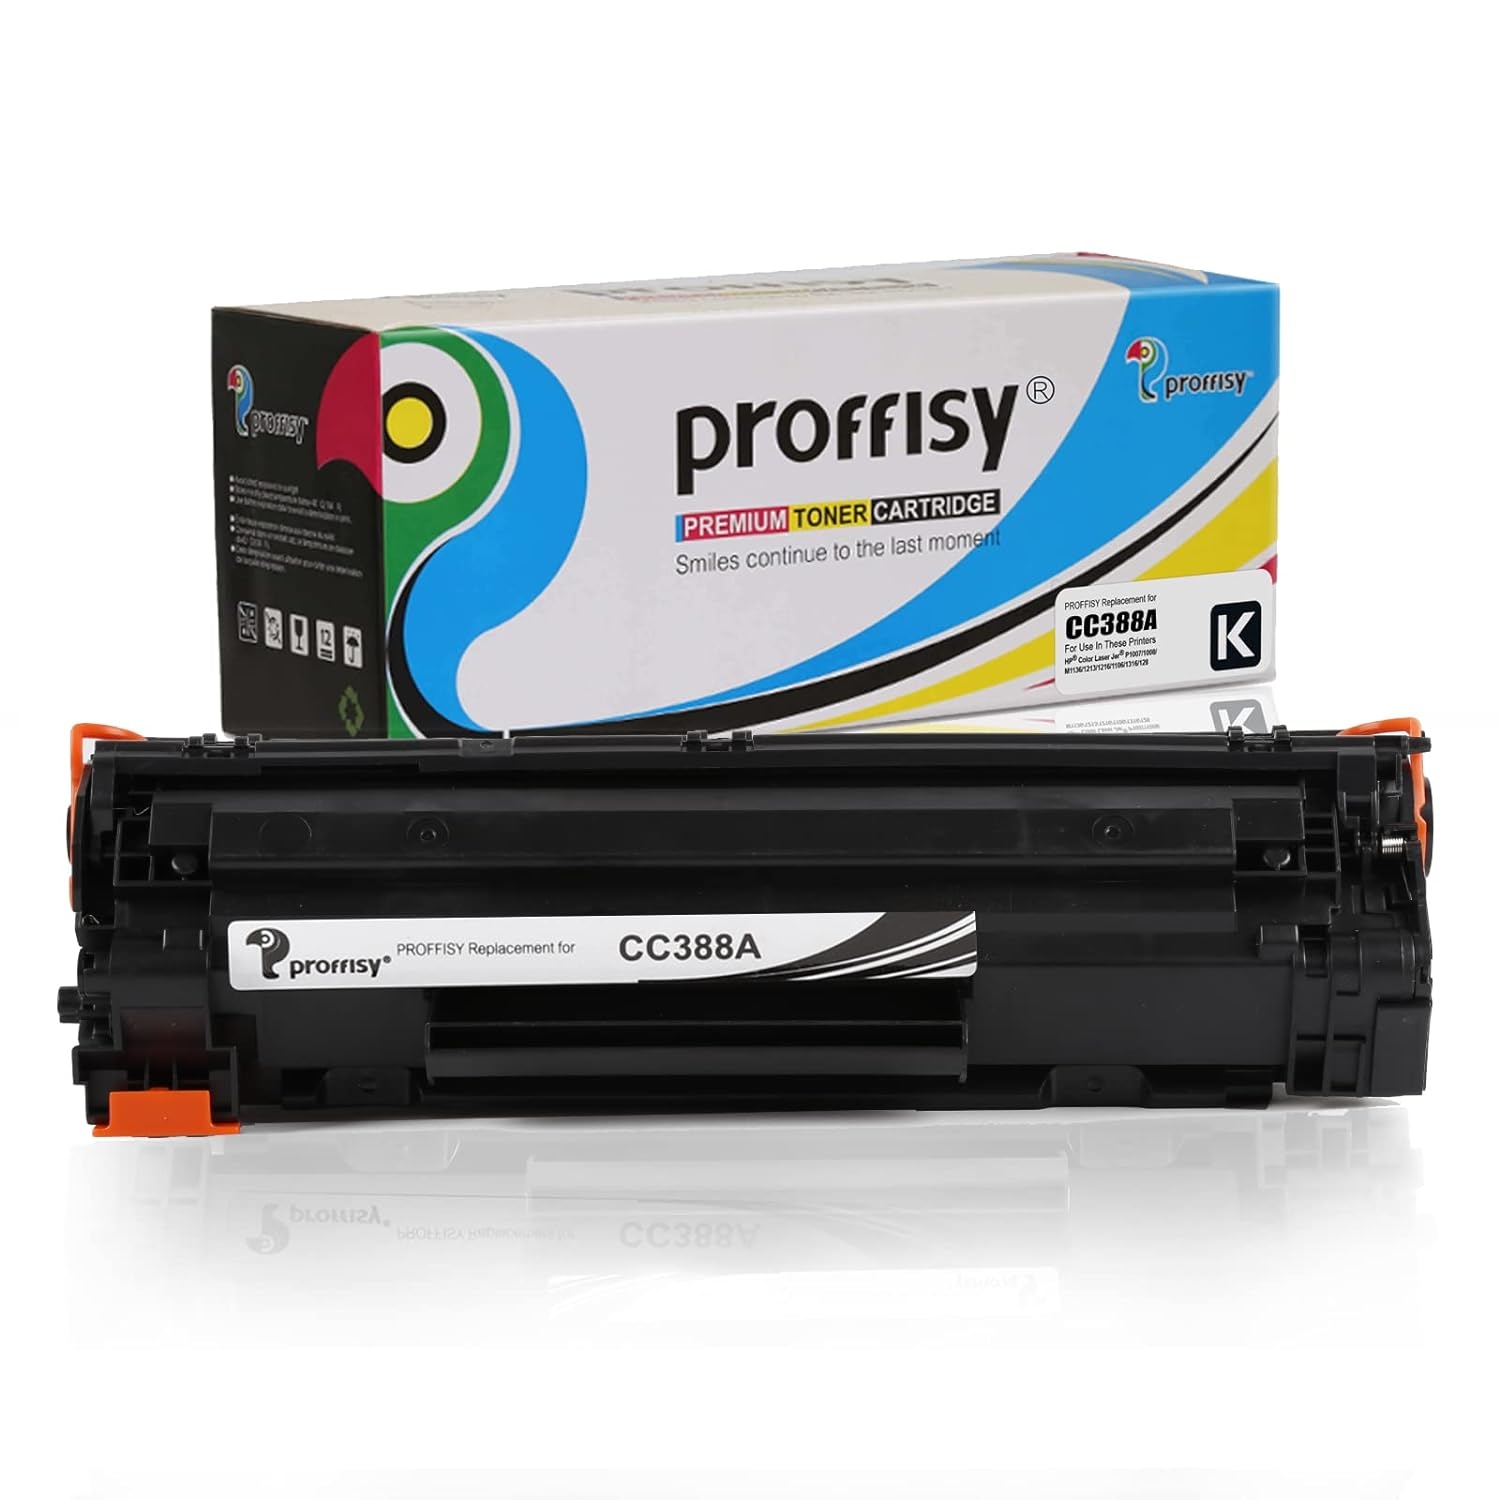 proffisy Toner Cartridge 88A CC388A for HP Laserjet Printers P1007, P1106, P1108, P1008, M1213nf MFP, M1136 MFP, M126nw MFP, M1216, M1218nfs, M128fw MFP, M128fn MFP, M226DW, M202DW-1 PCS